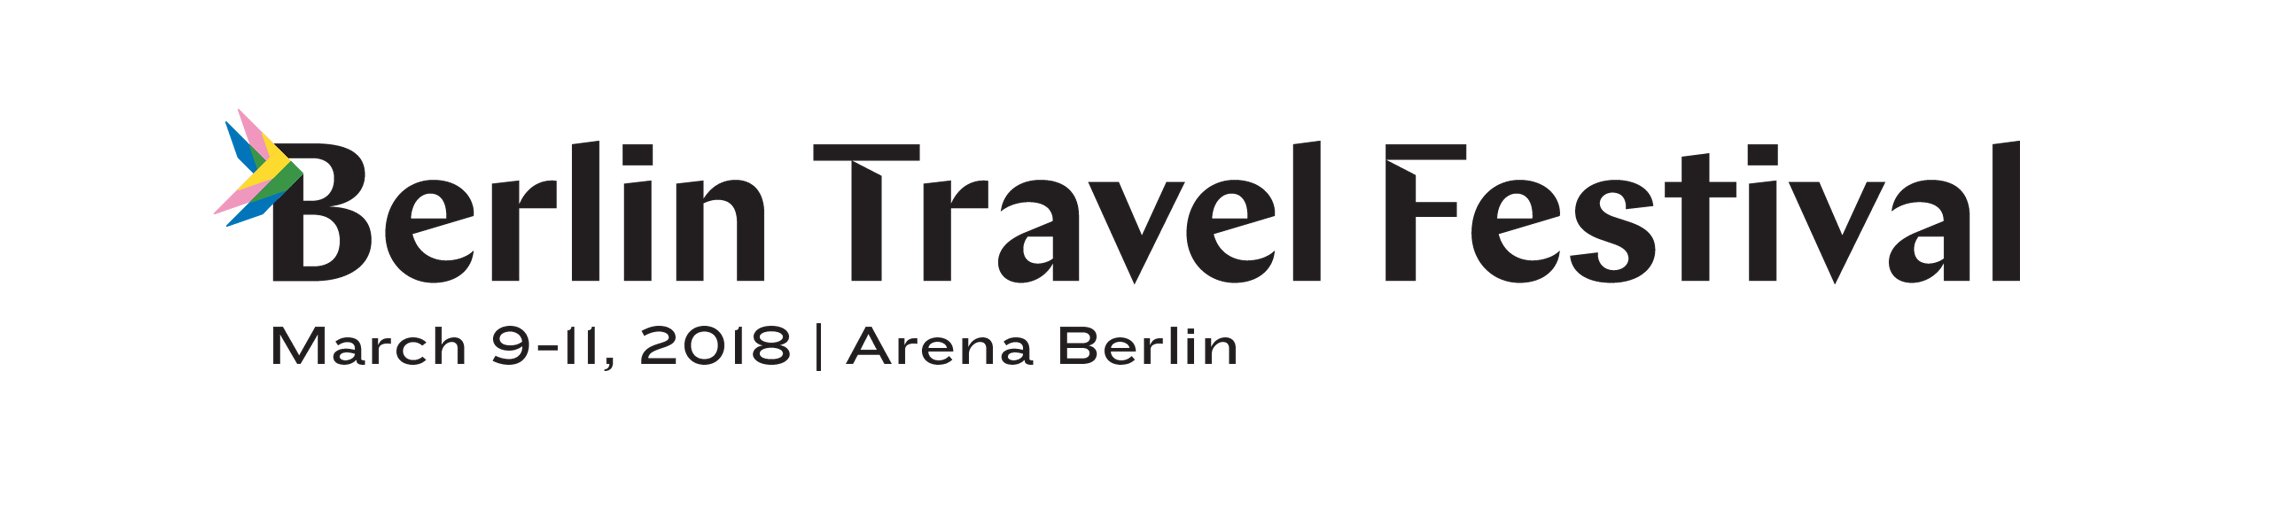 Berlin Travel Festival Logo .png